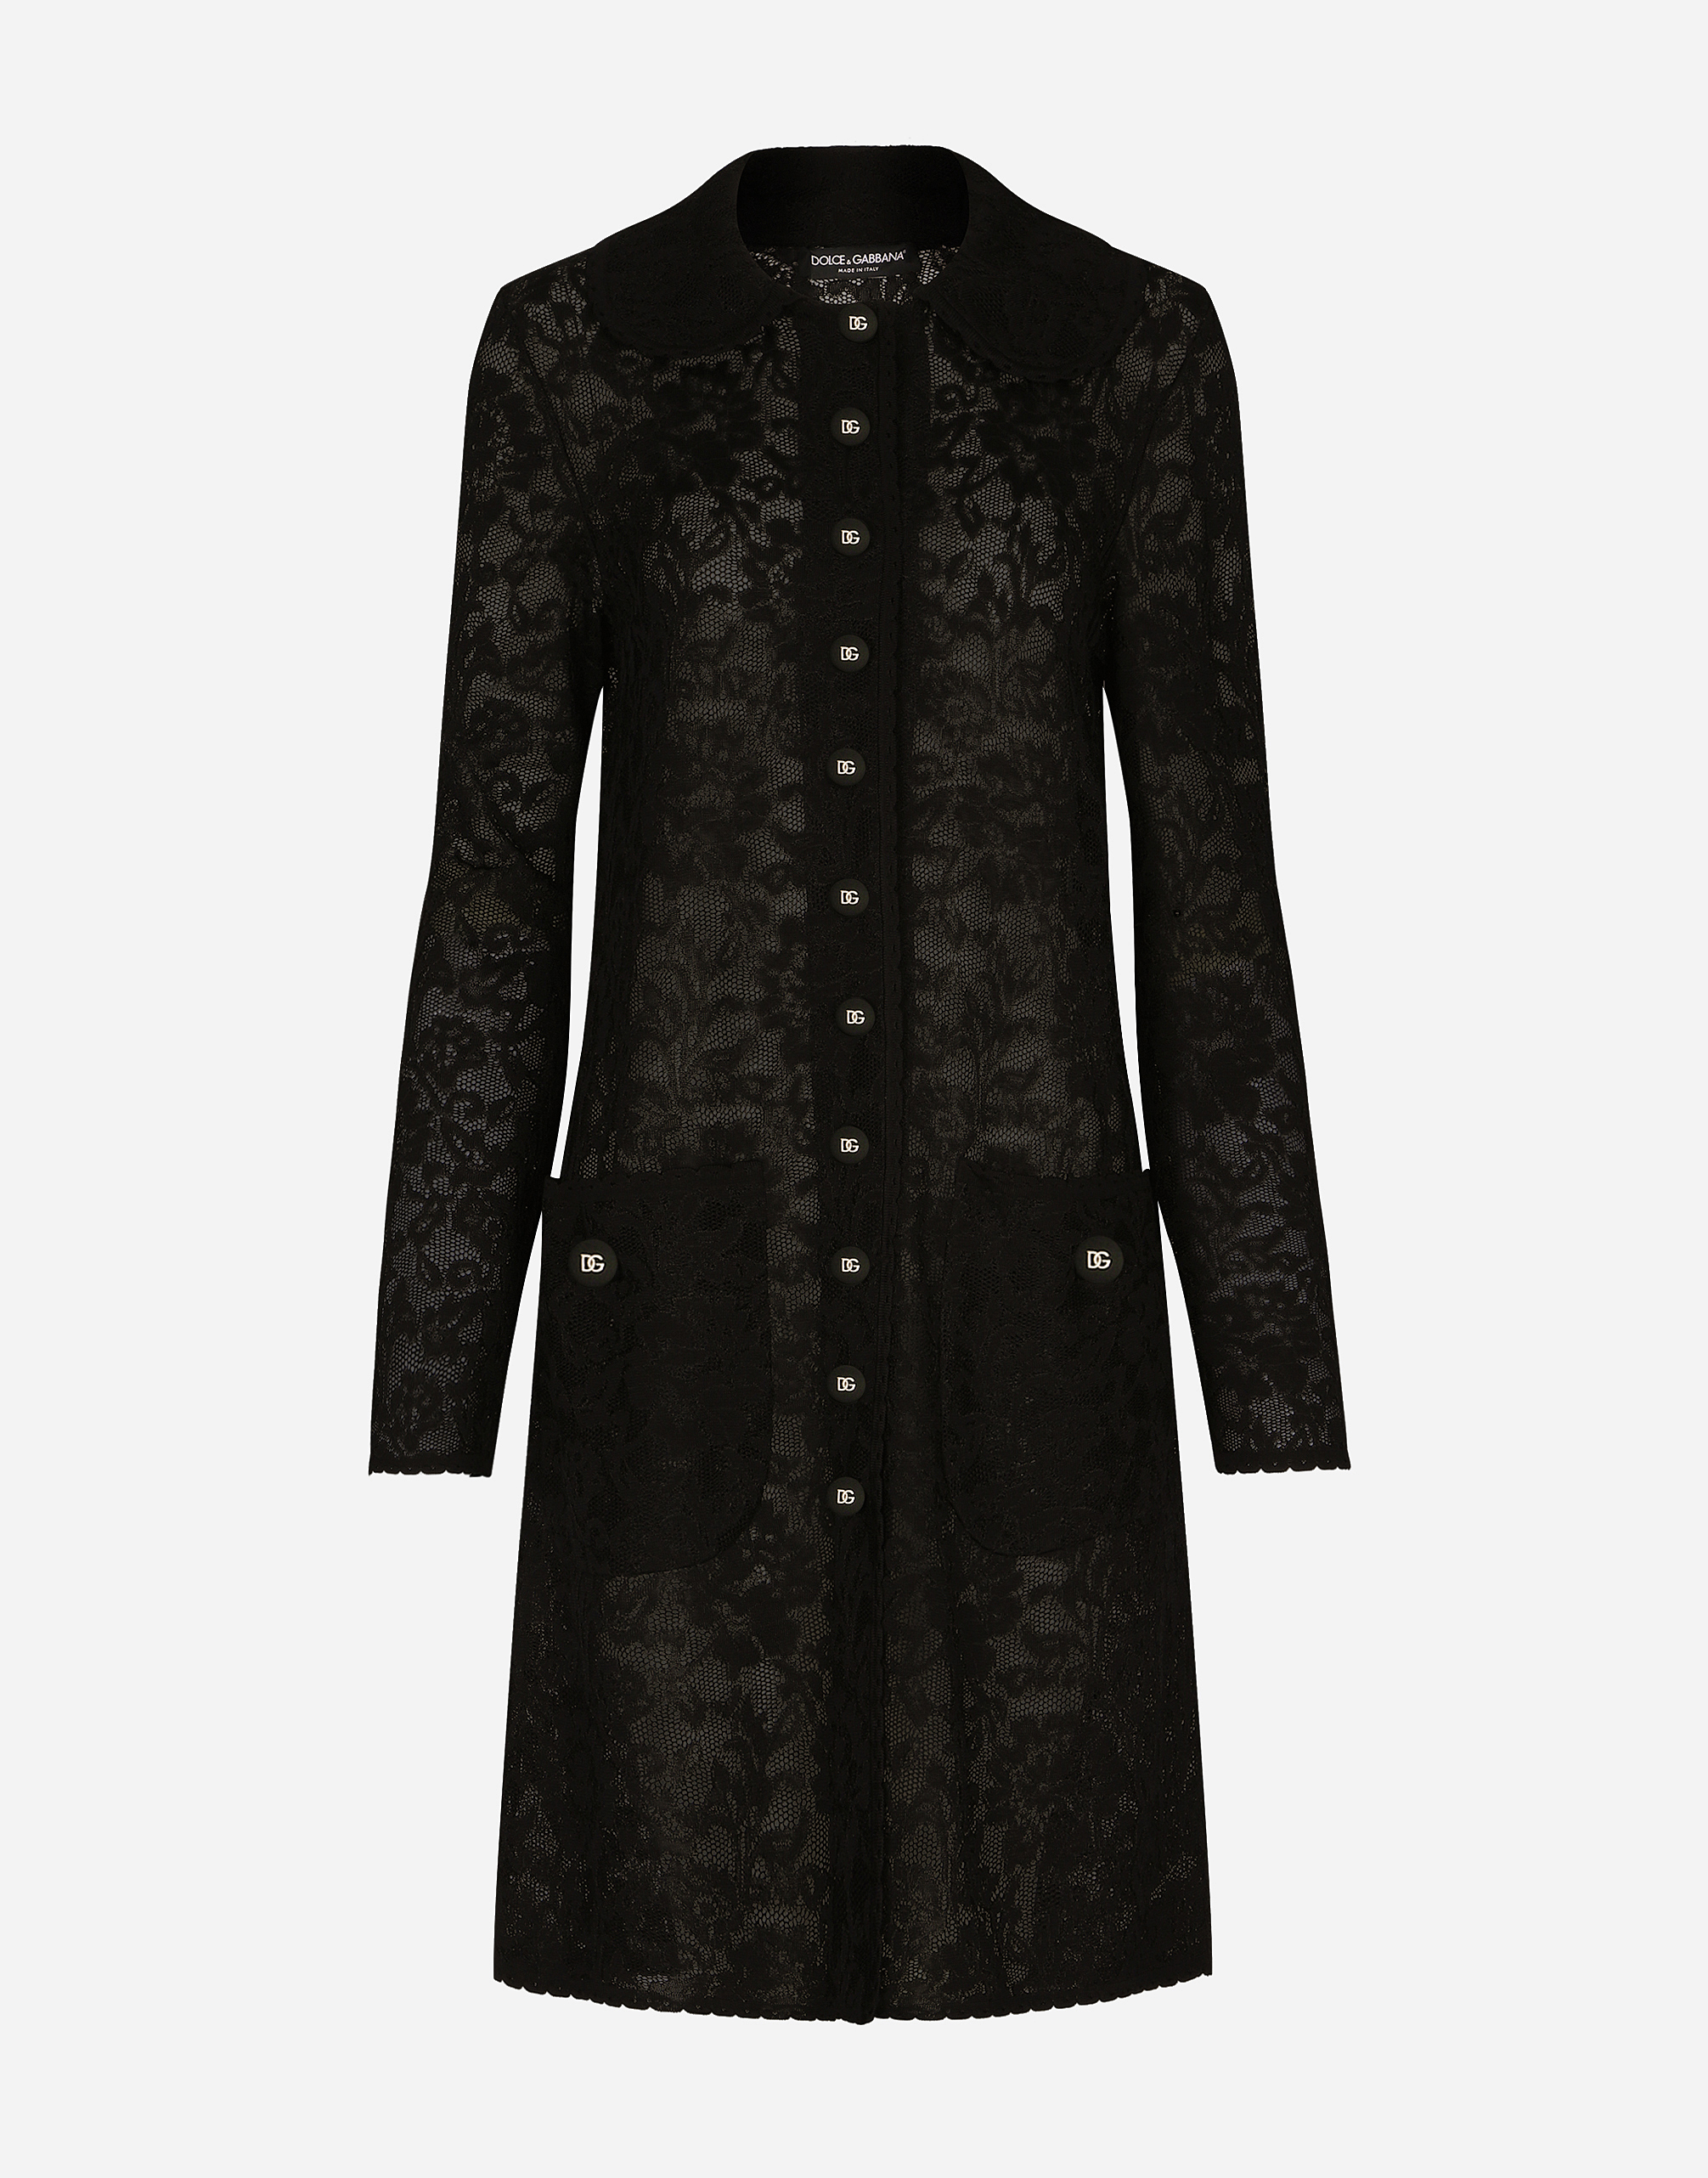 Dolce & Gabbana Lace-stitch Dg Jacket In Black